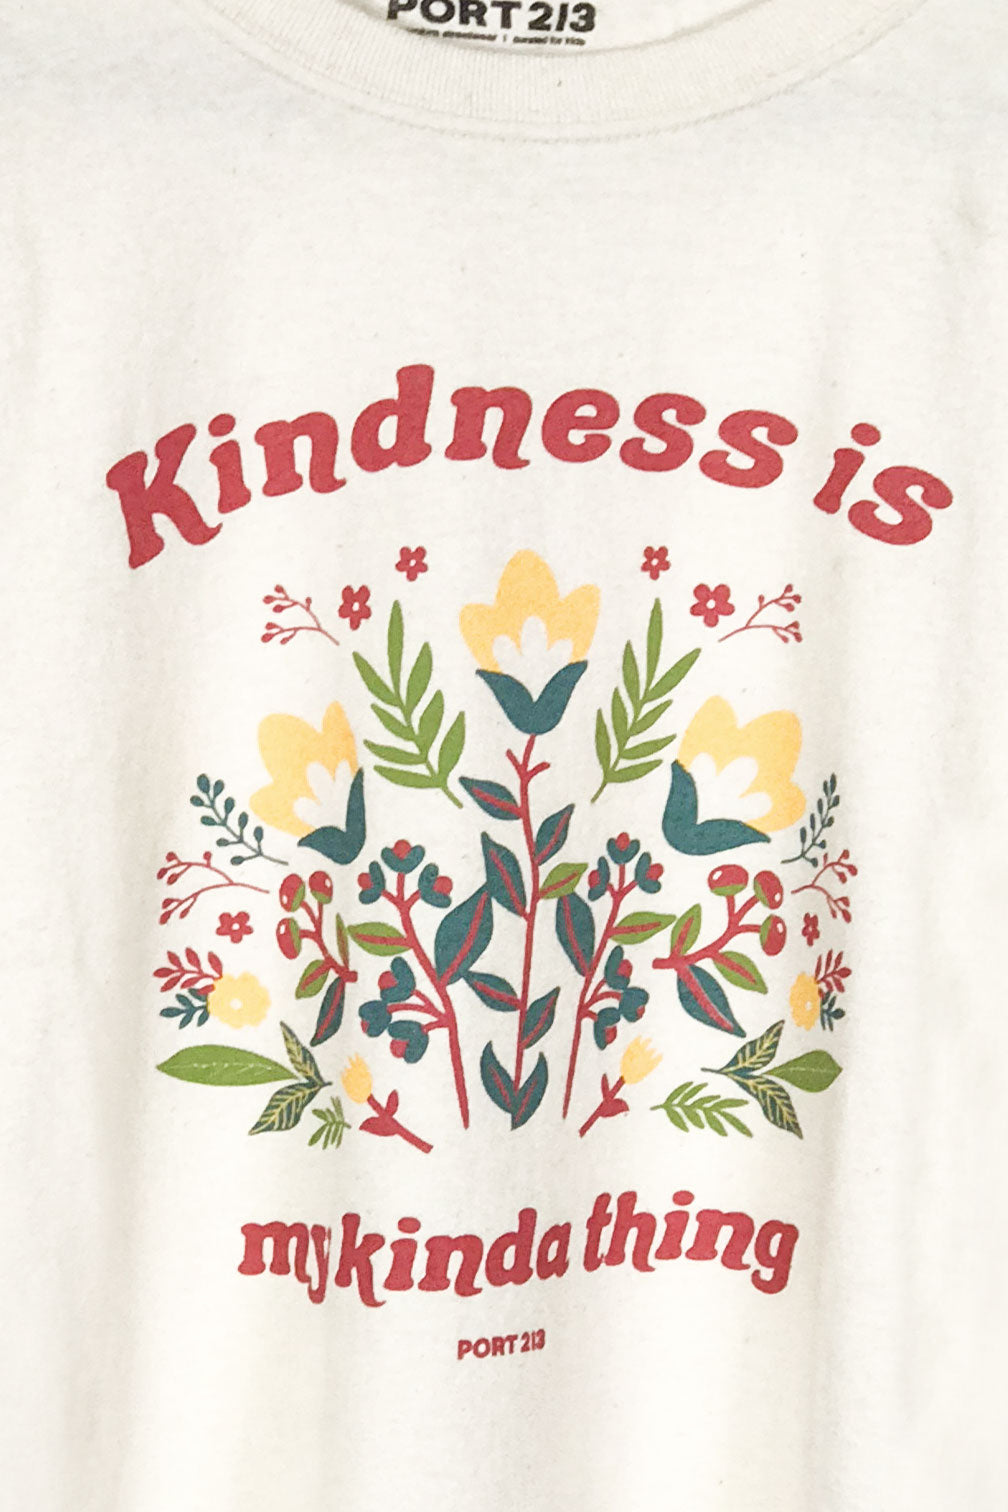 Ivory Kindness T-shirt